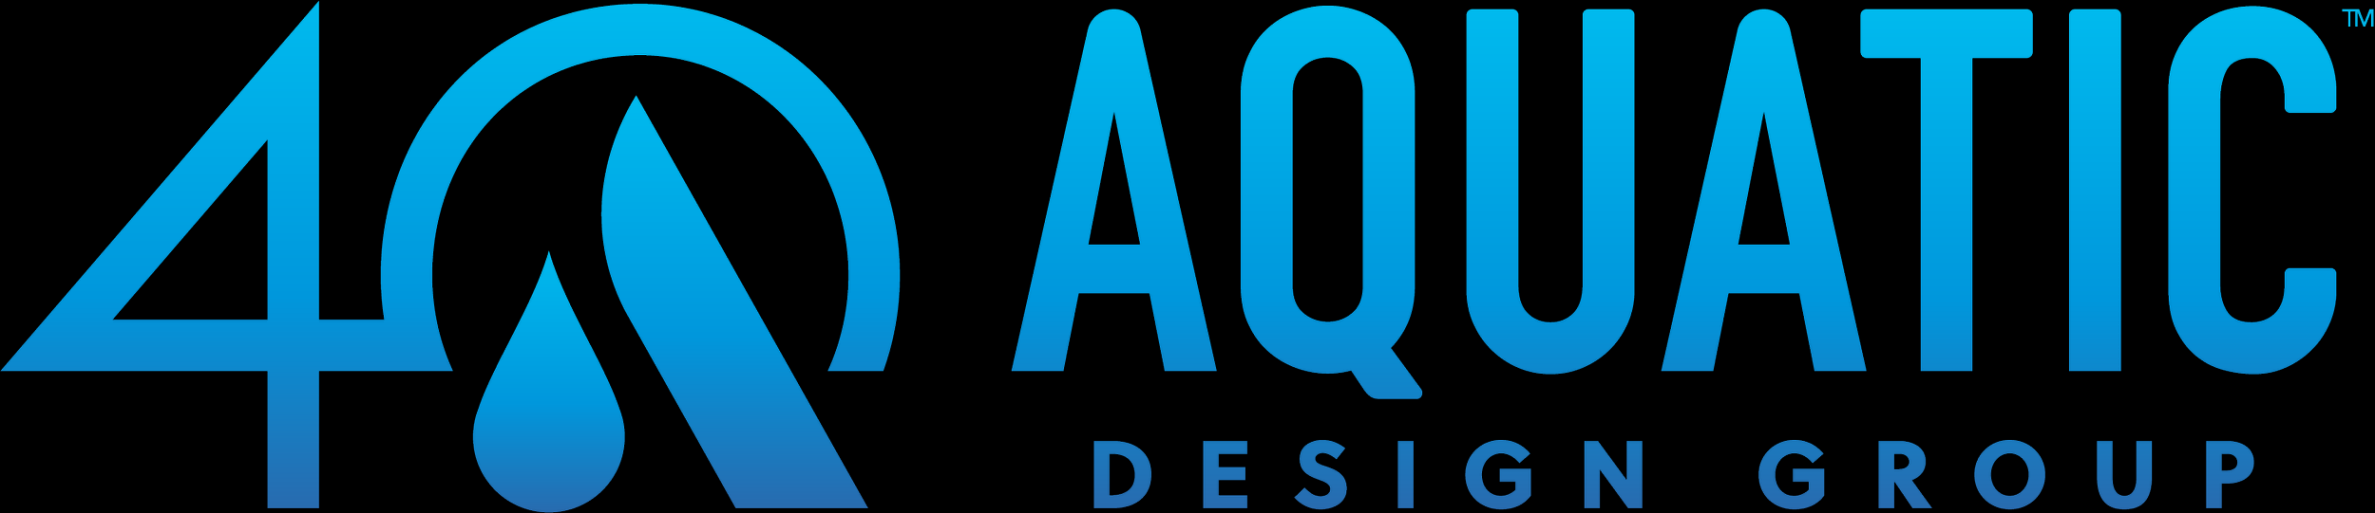 aquatic design group Bulan 1 Aquatic Design Group - Envision. Design. Experience.